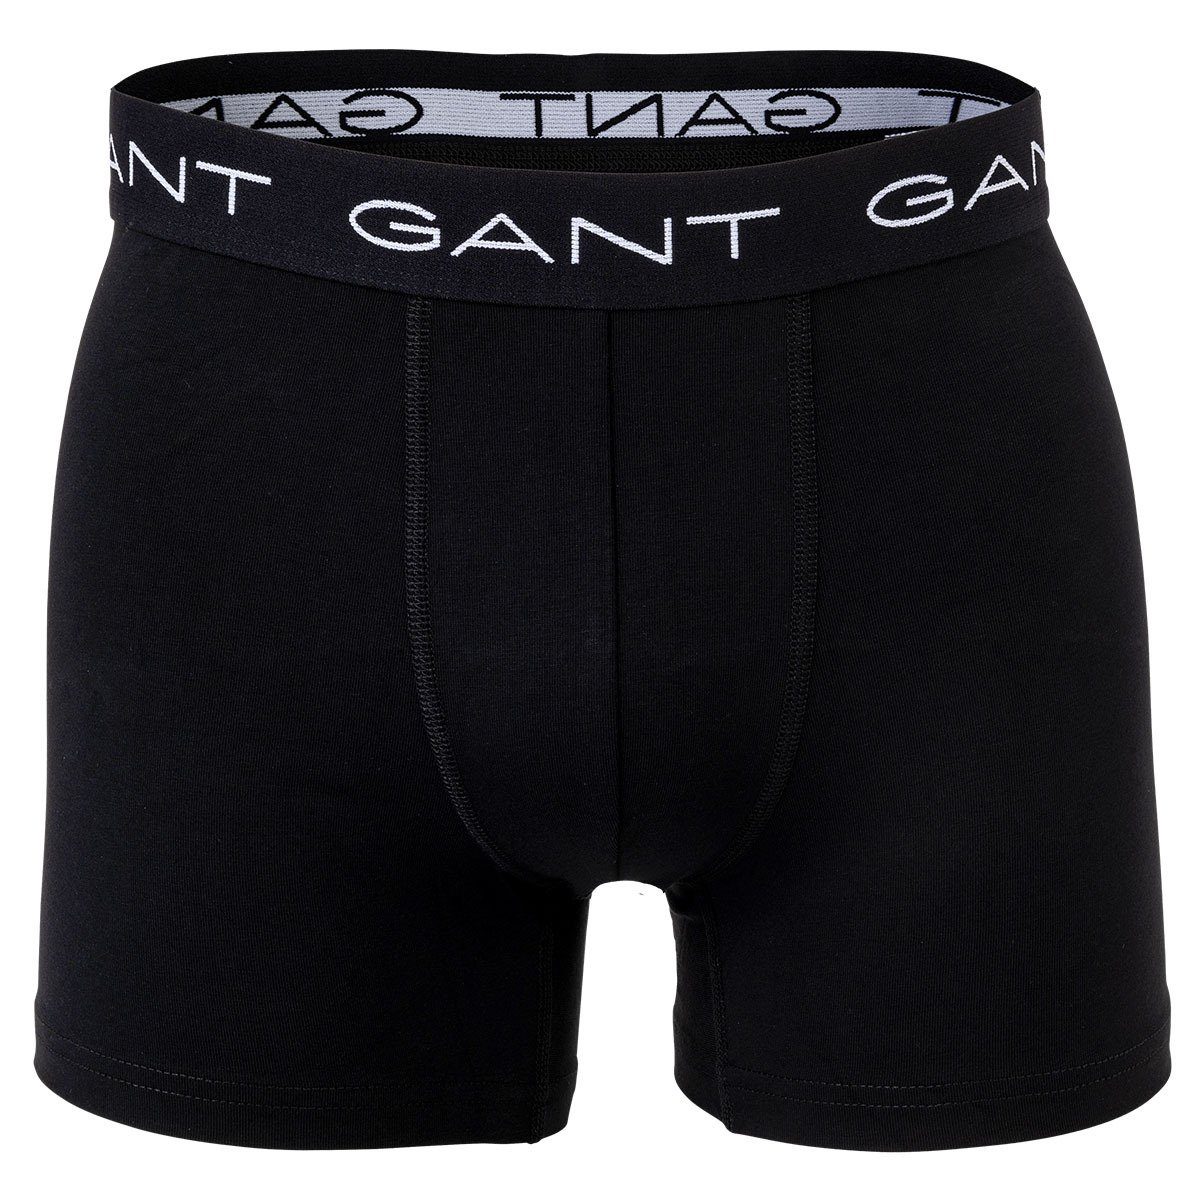 - Schwarz Pack Boxer Shorts, Herren Boxer 3er Gant Boxer Briefs